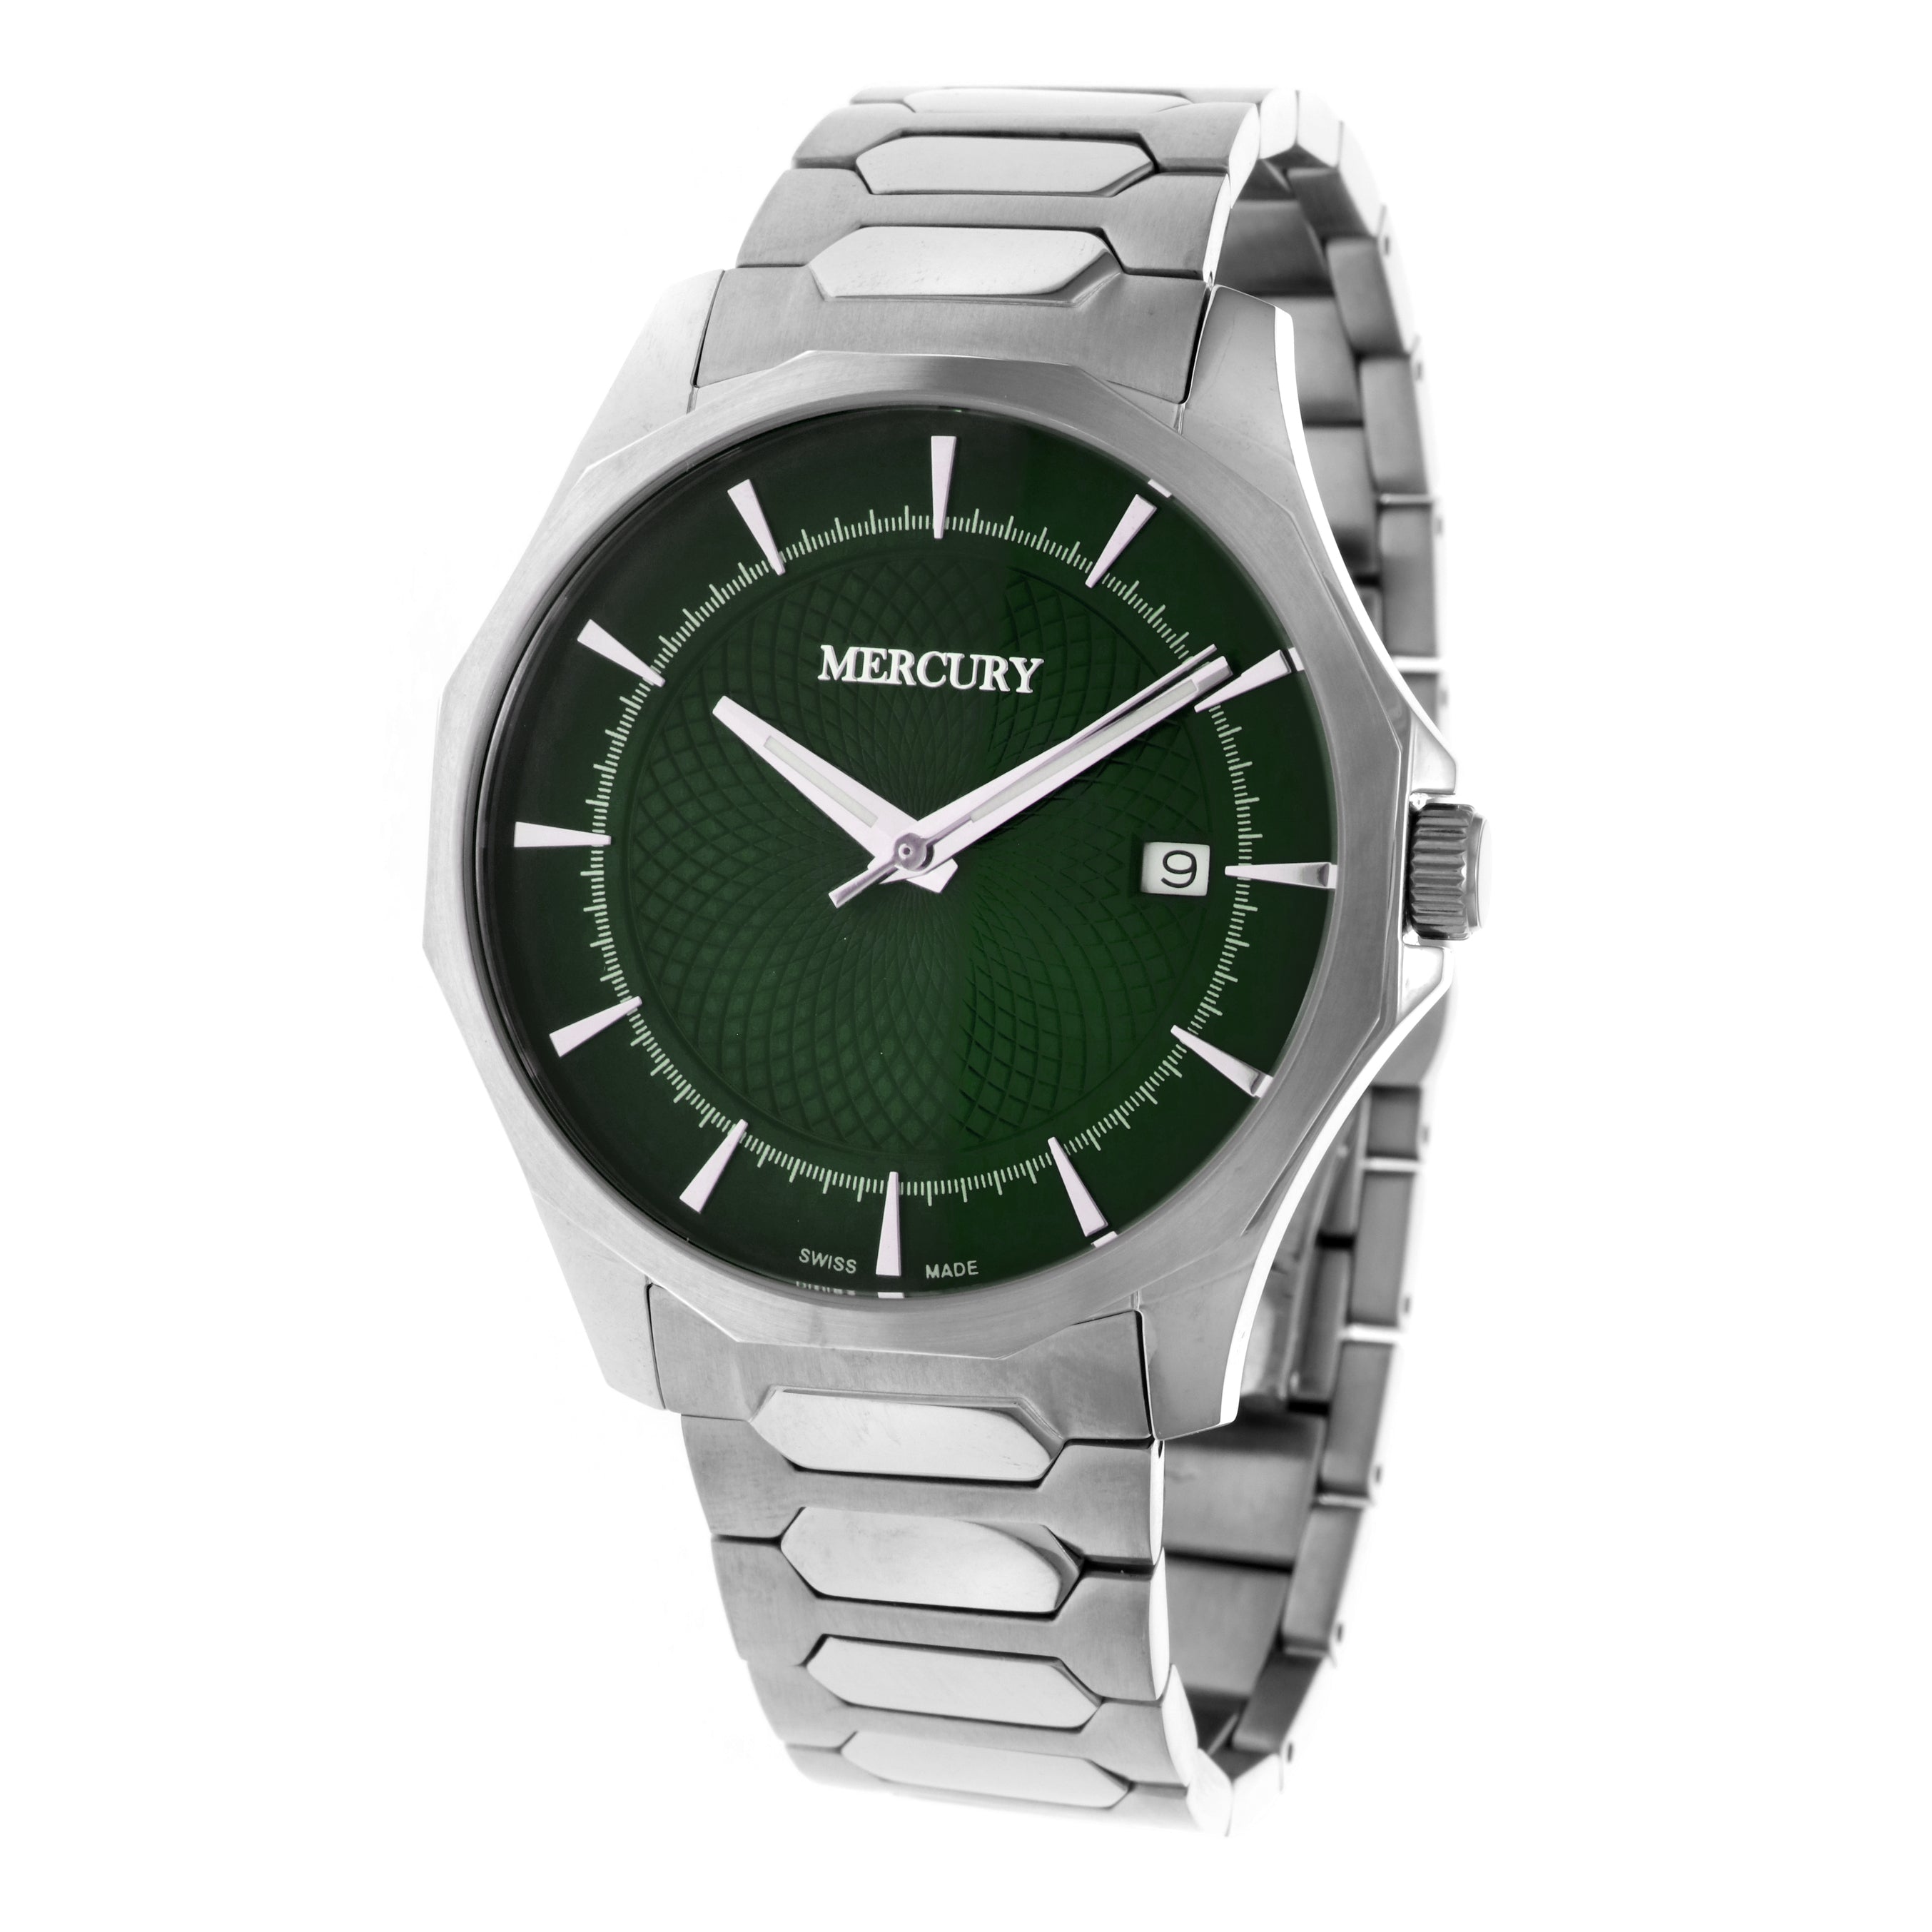 Mercury Men's Swiss Quartz Watch with Green Dial - MER-0046